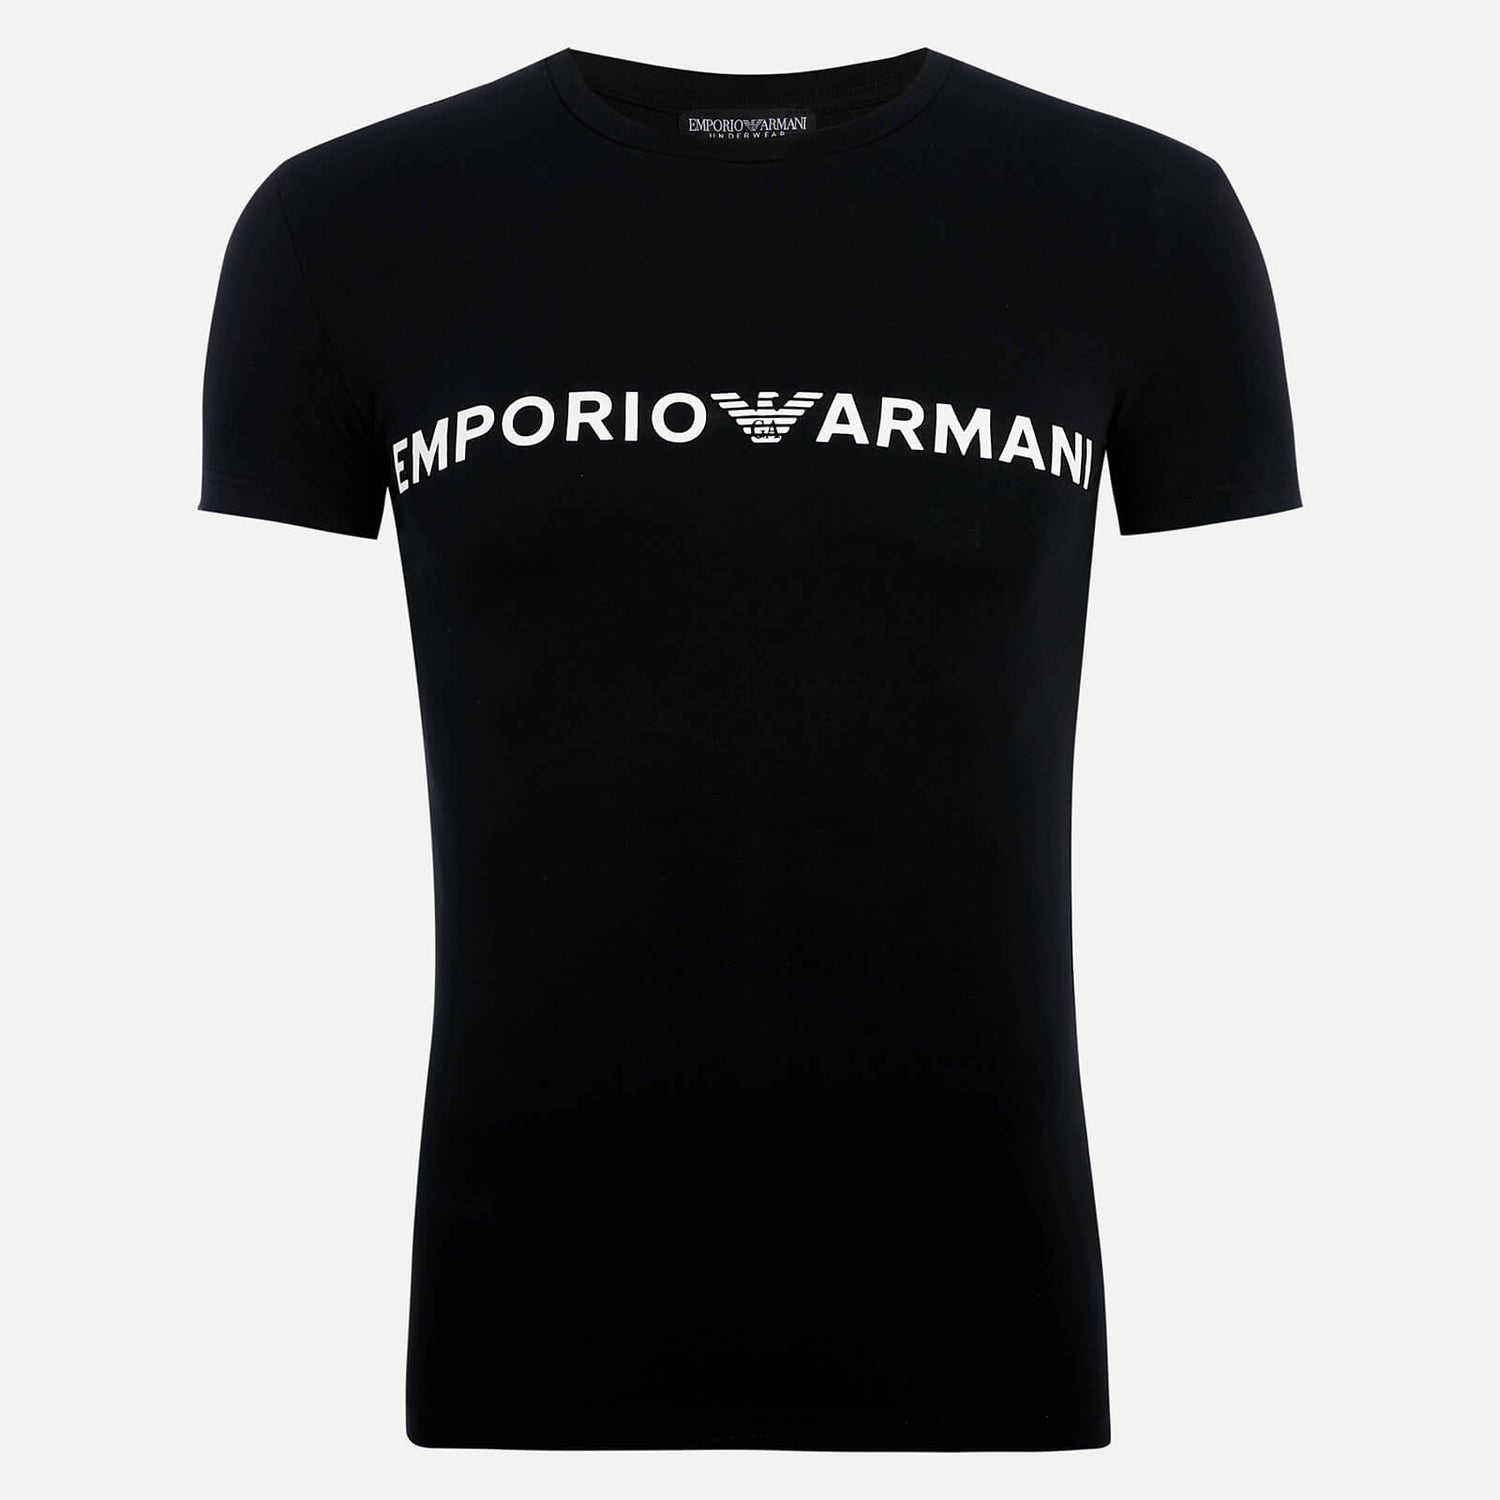 Emporio Armani Men's Megalogo T-Shirt and Trunks - Black - S